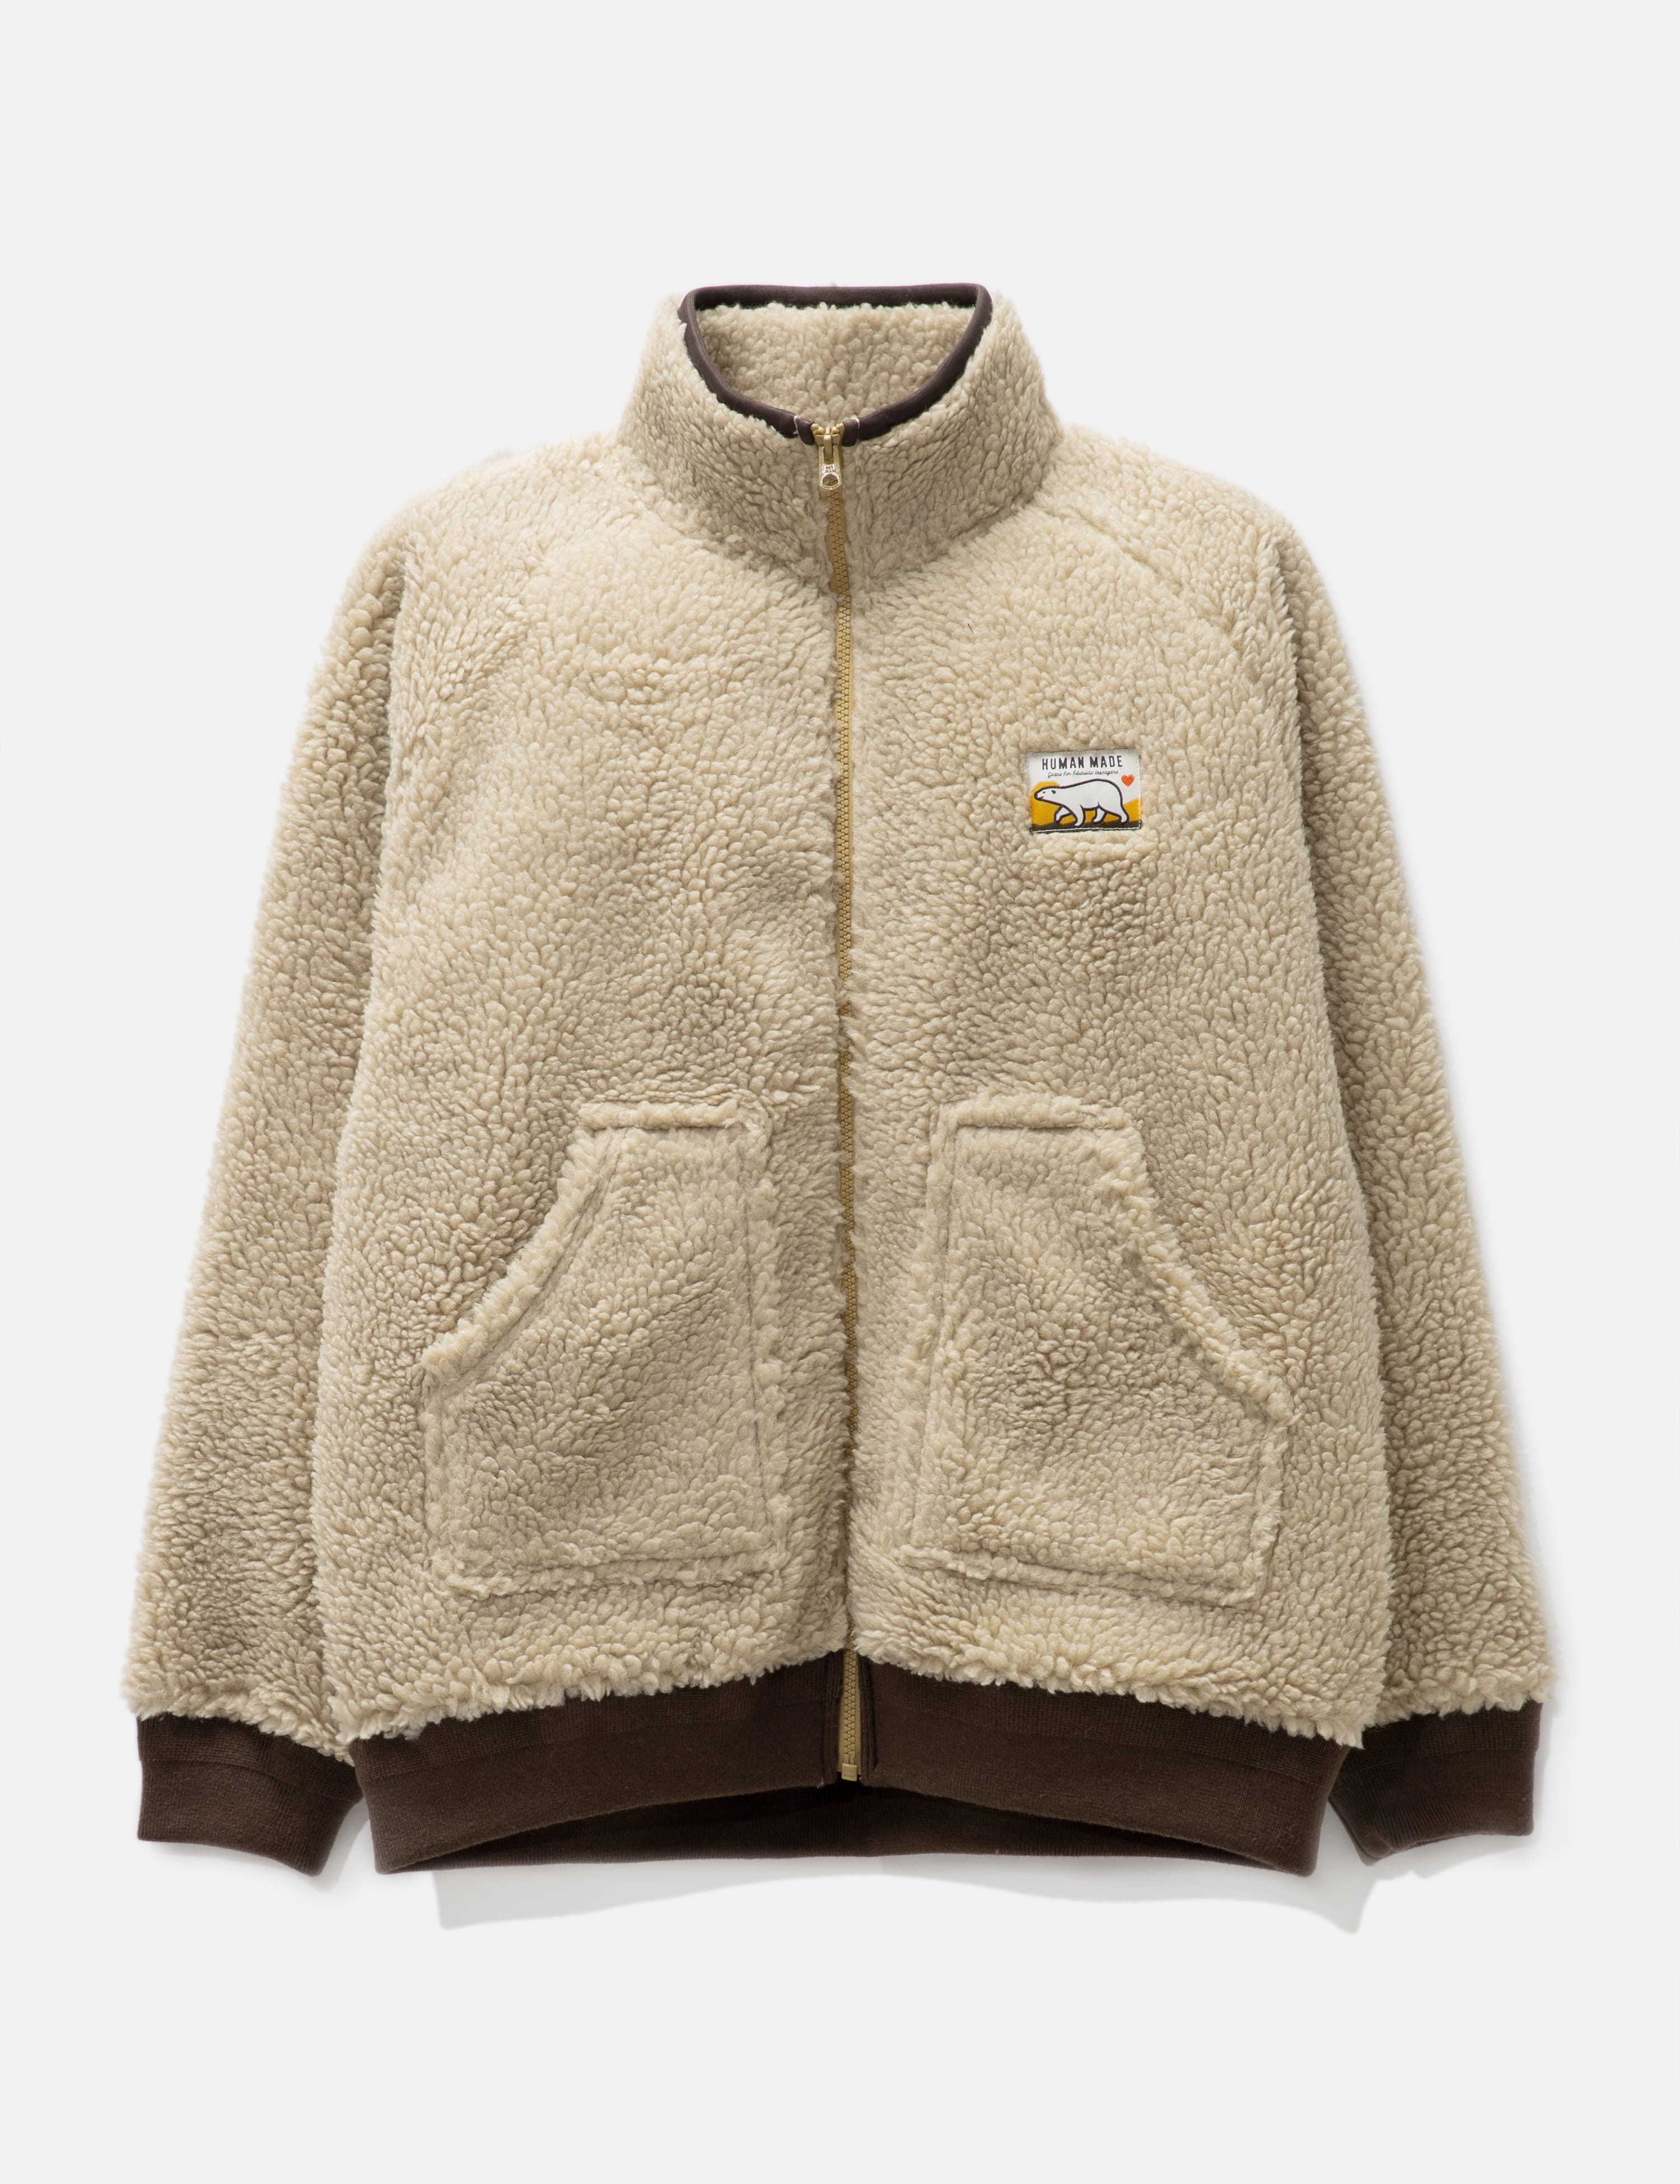 Human Made - Boa Fleece Jacket | HBX - Globally Curated Fashion